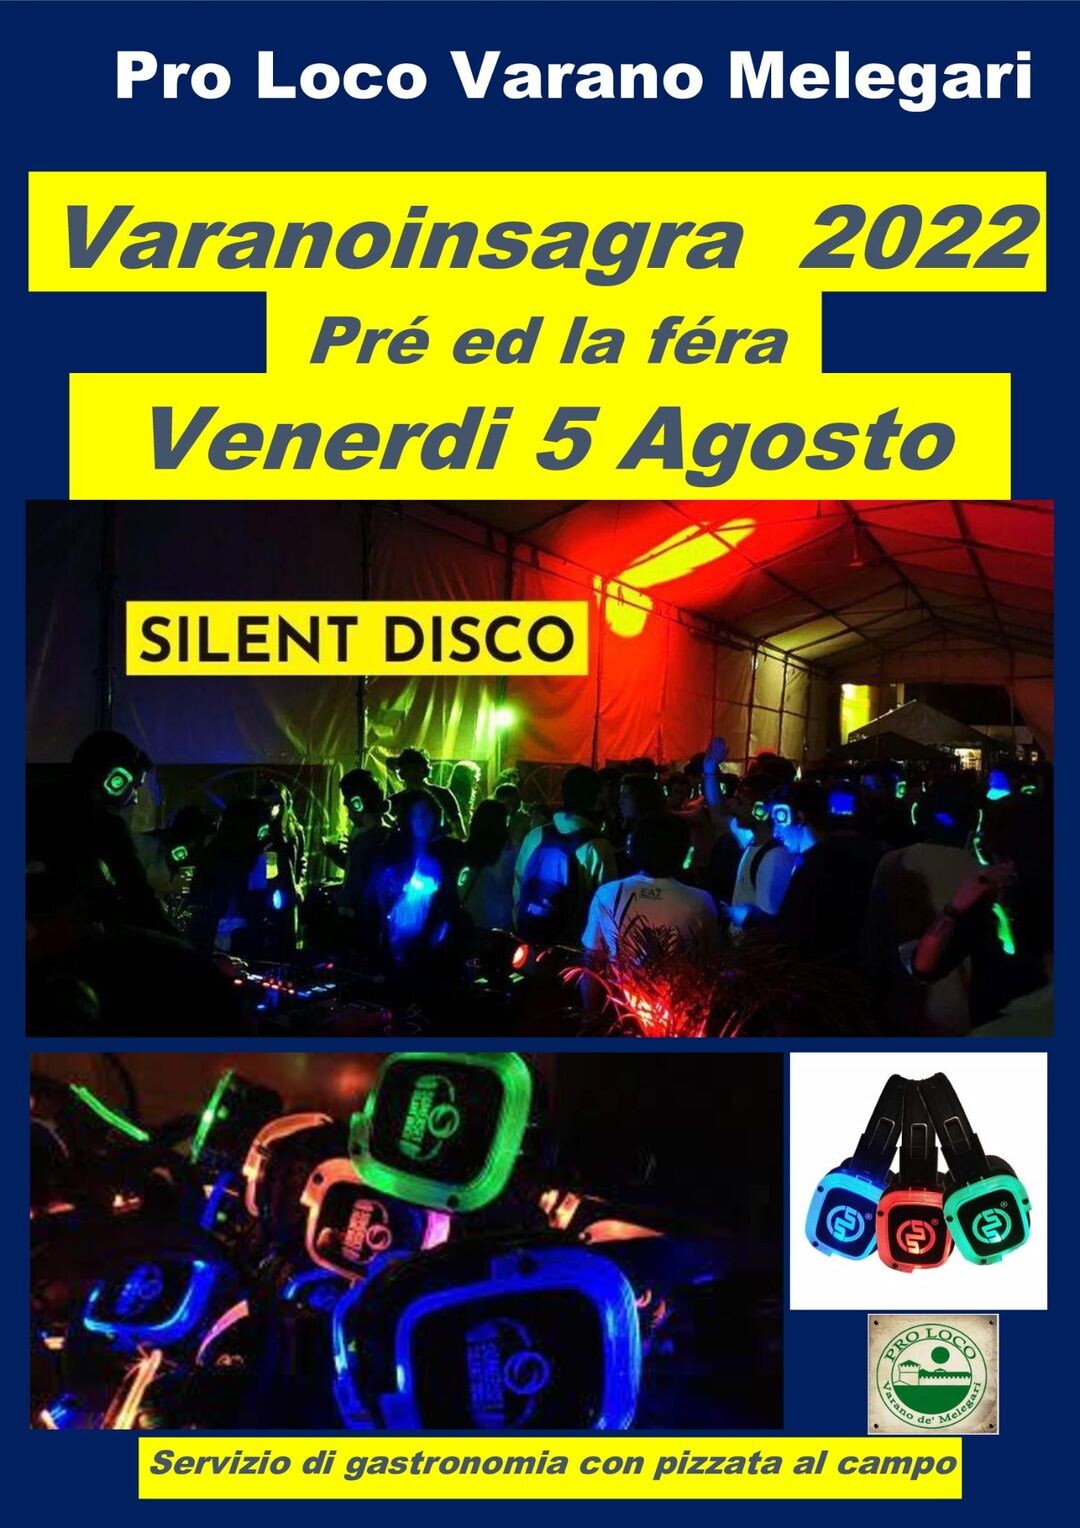 Varano in sagra: silent disco